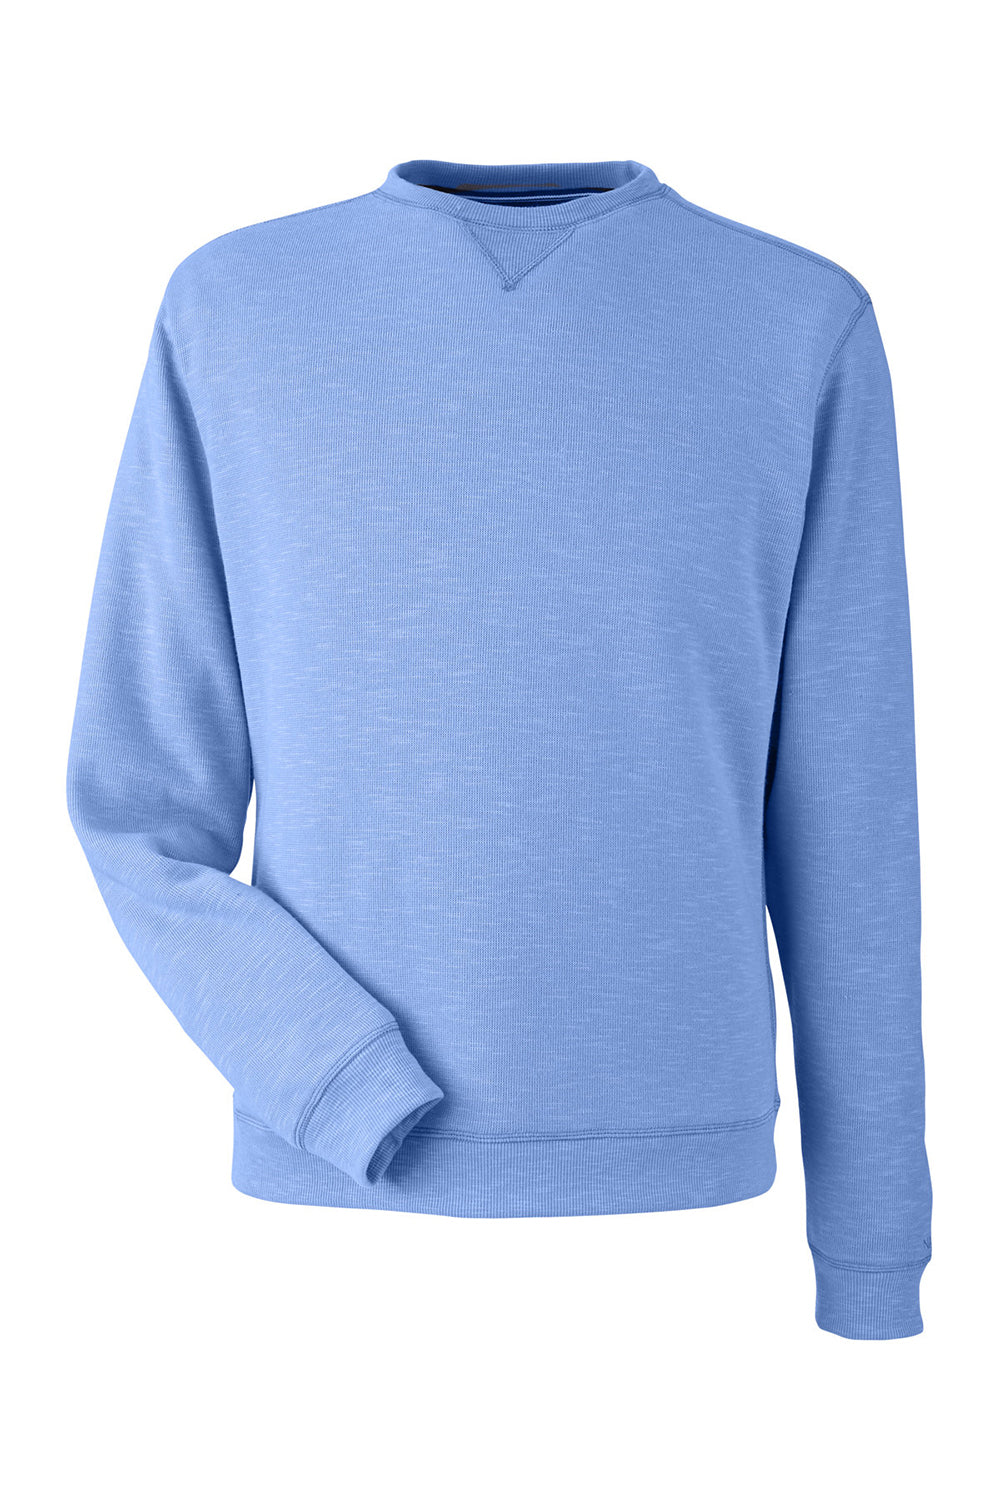 Nautica N17989 Mens Sun Surfer Supreme Crewneck Sweatshirt Vintage Mavi Blue Flat Front